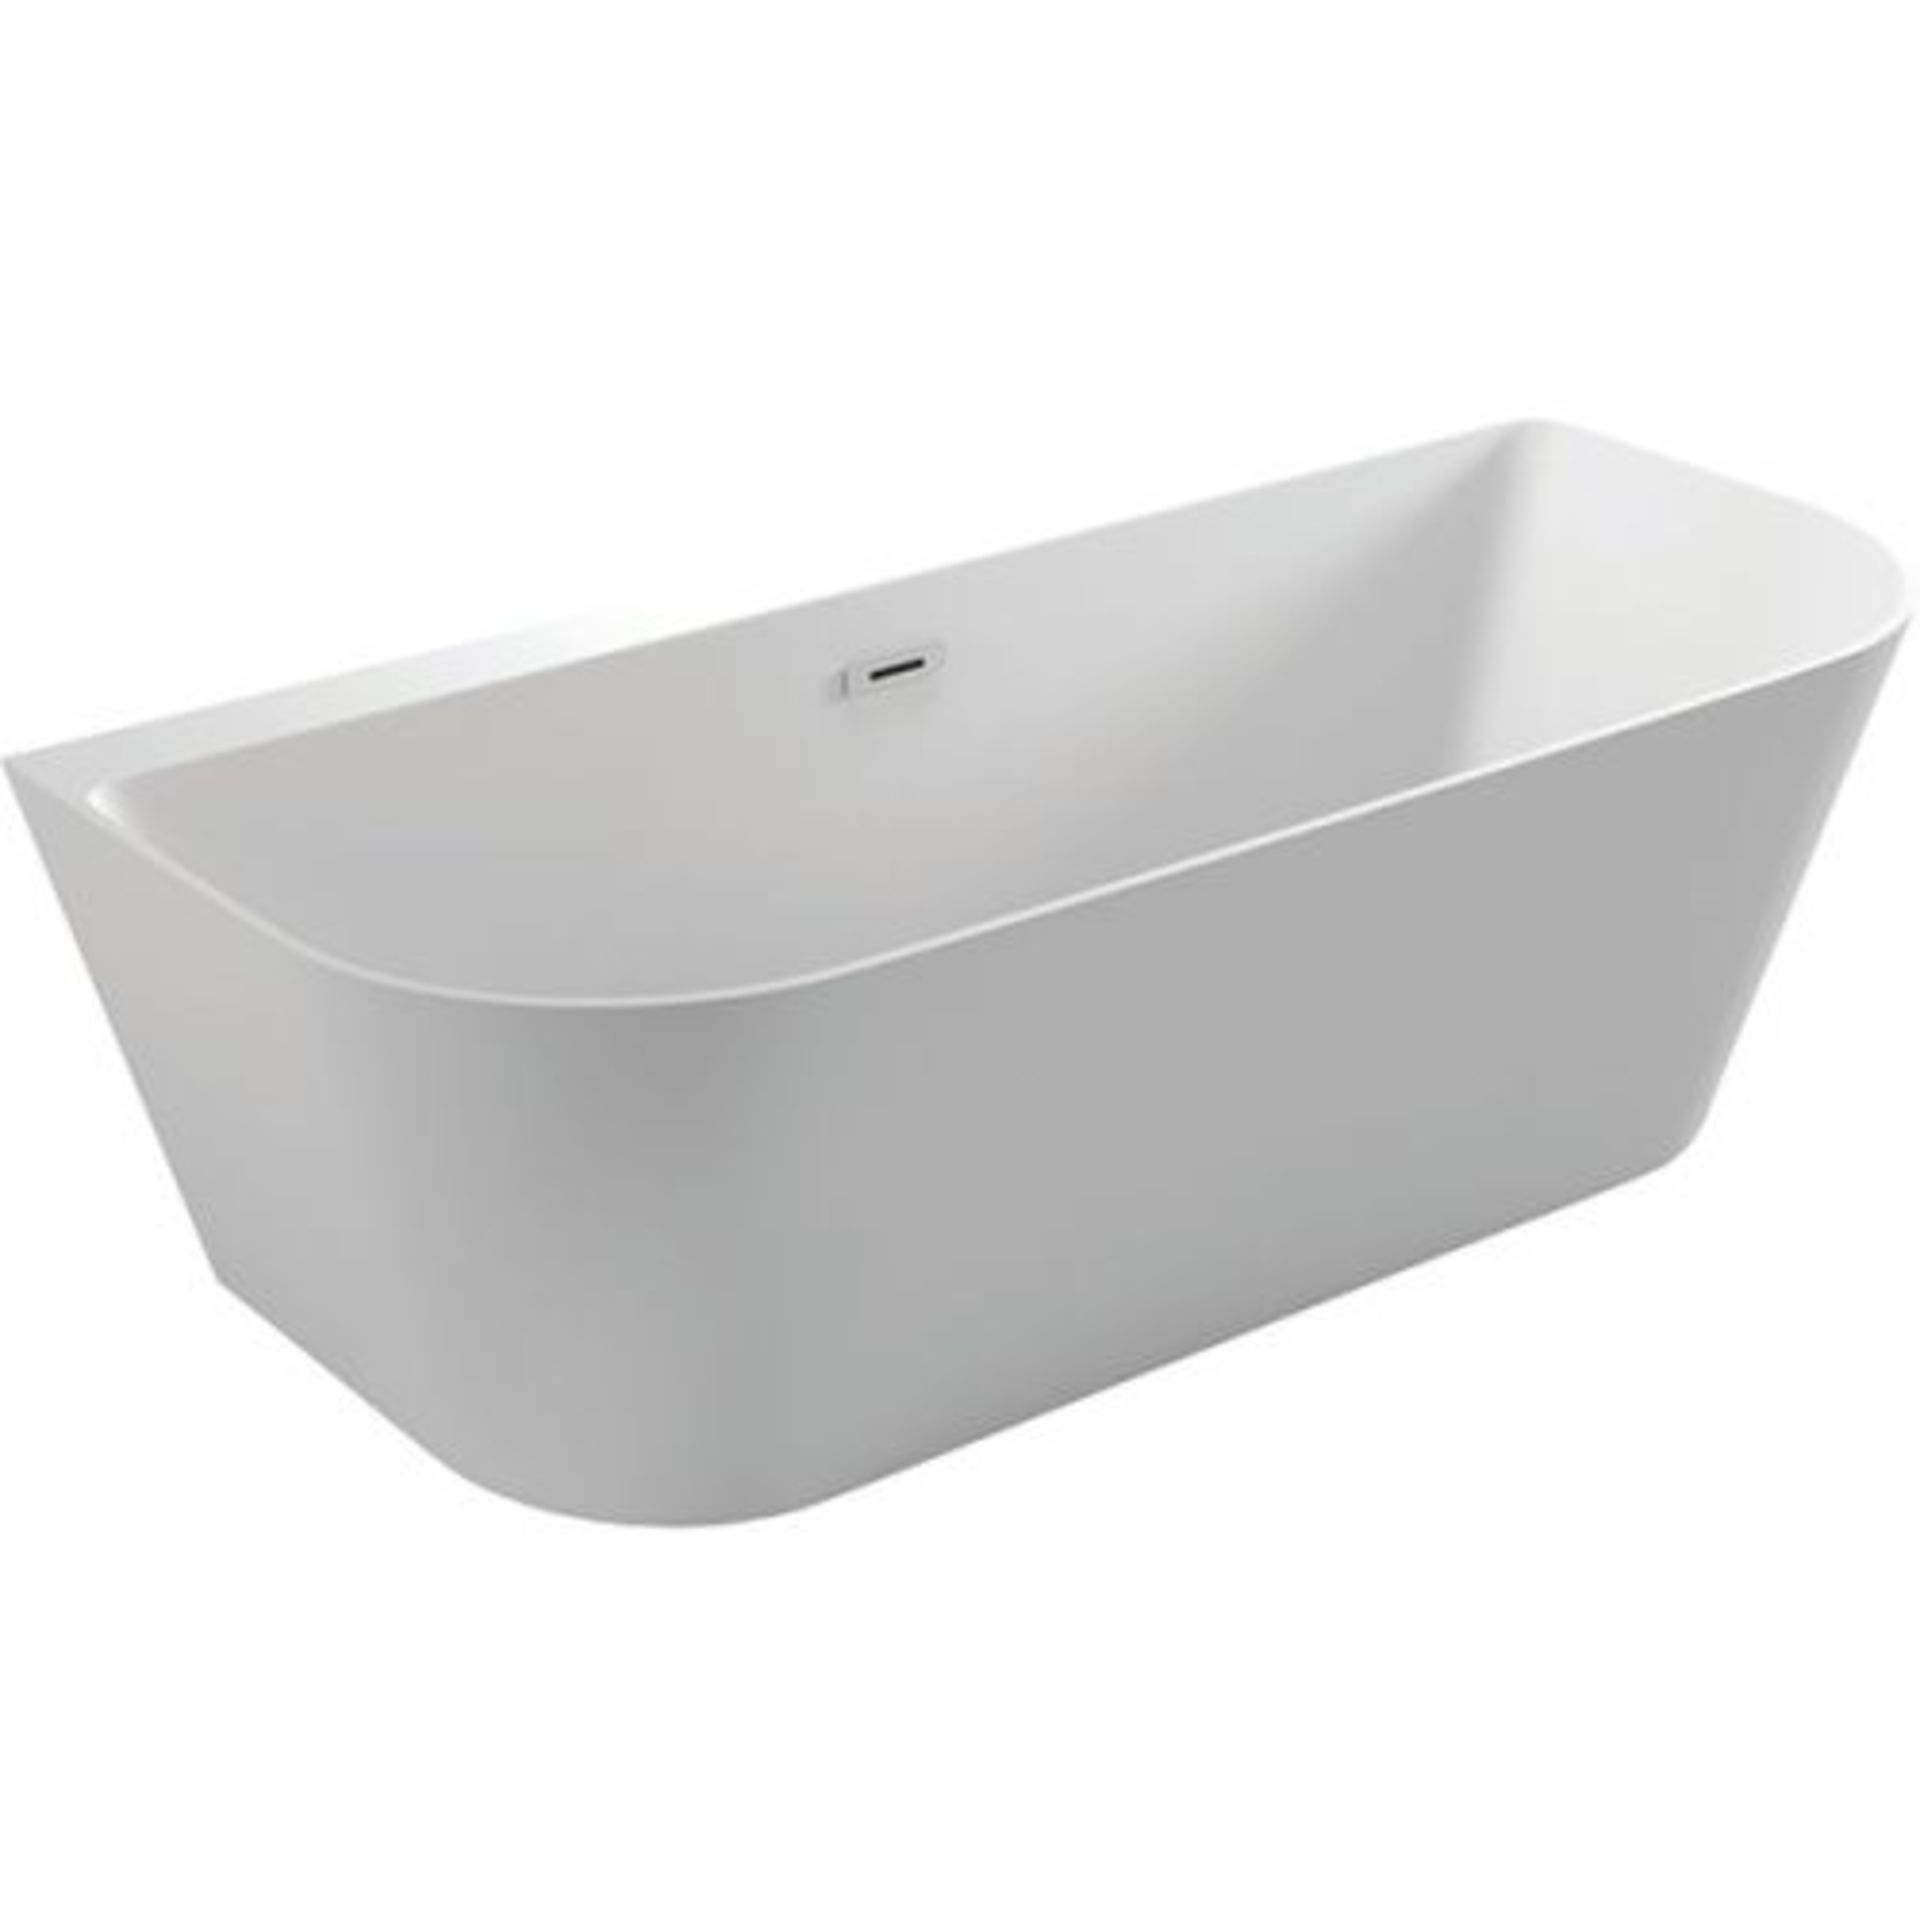 New (J1) 1500x750mm Modern Freestanding D Shape Bath. Rrp £1,401.99. White Acrylic Finish Supp... - Image 2 of 2